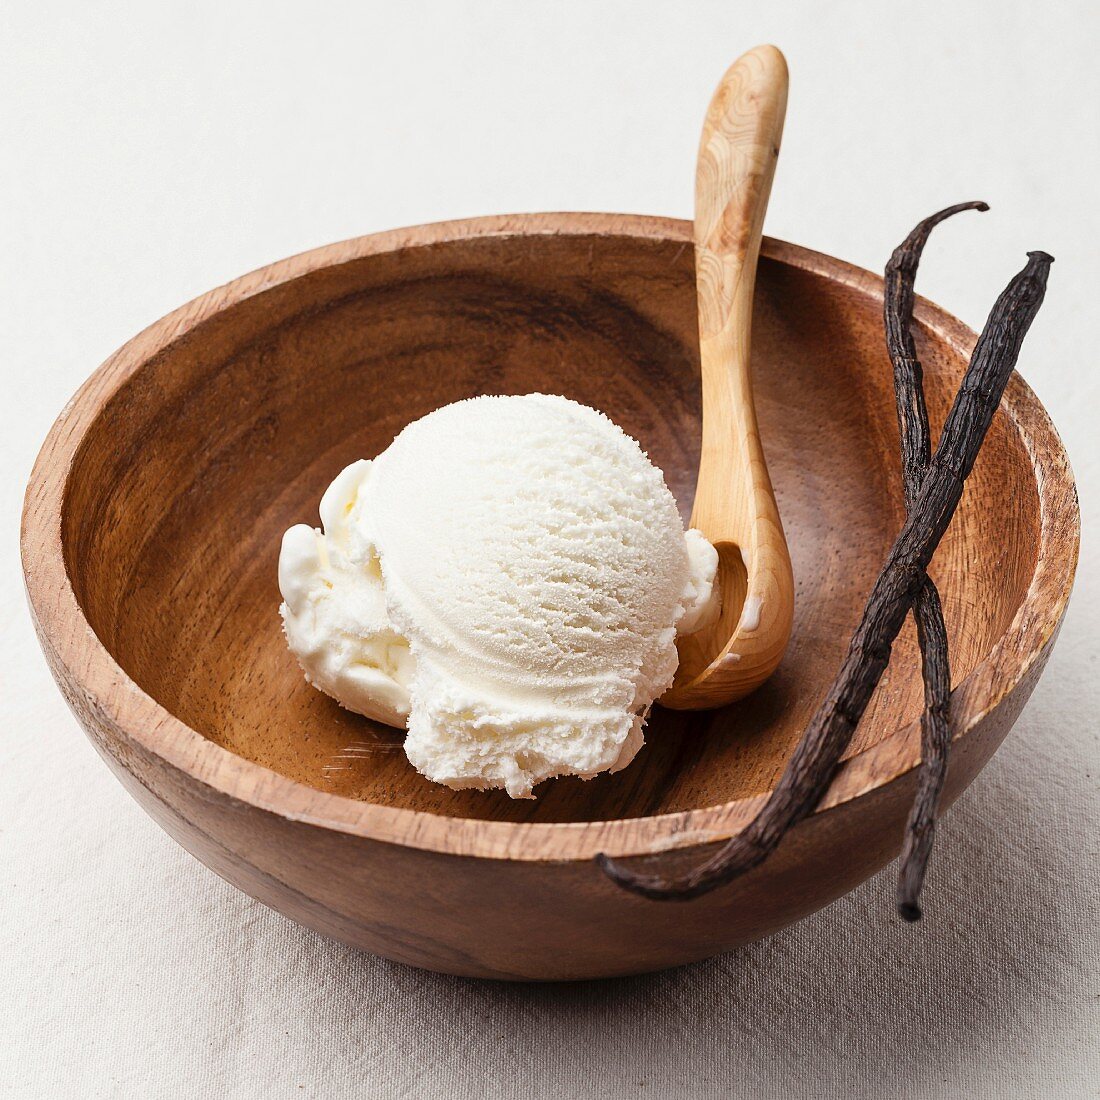 Vanilla ice cream in wooden bowl